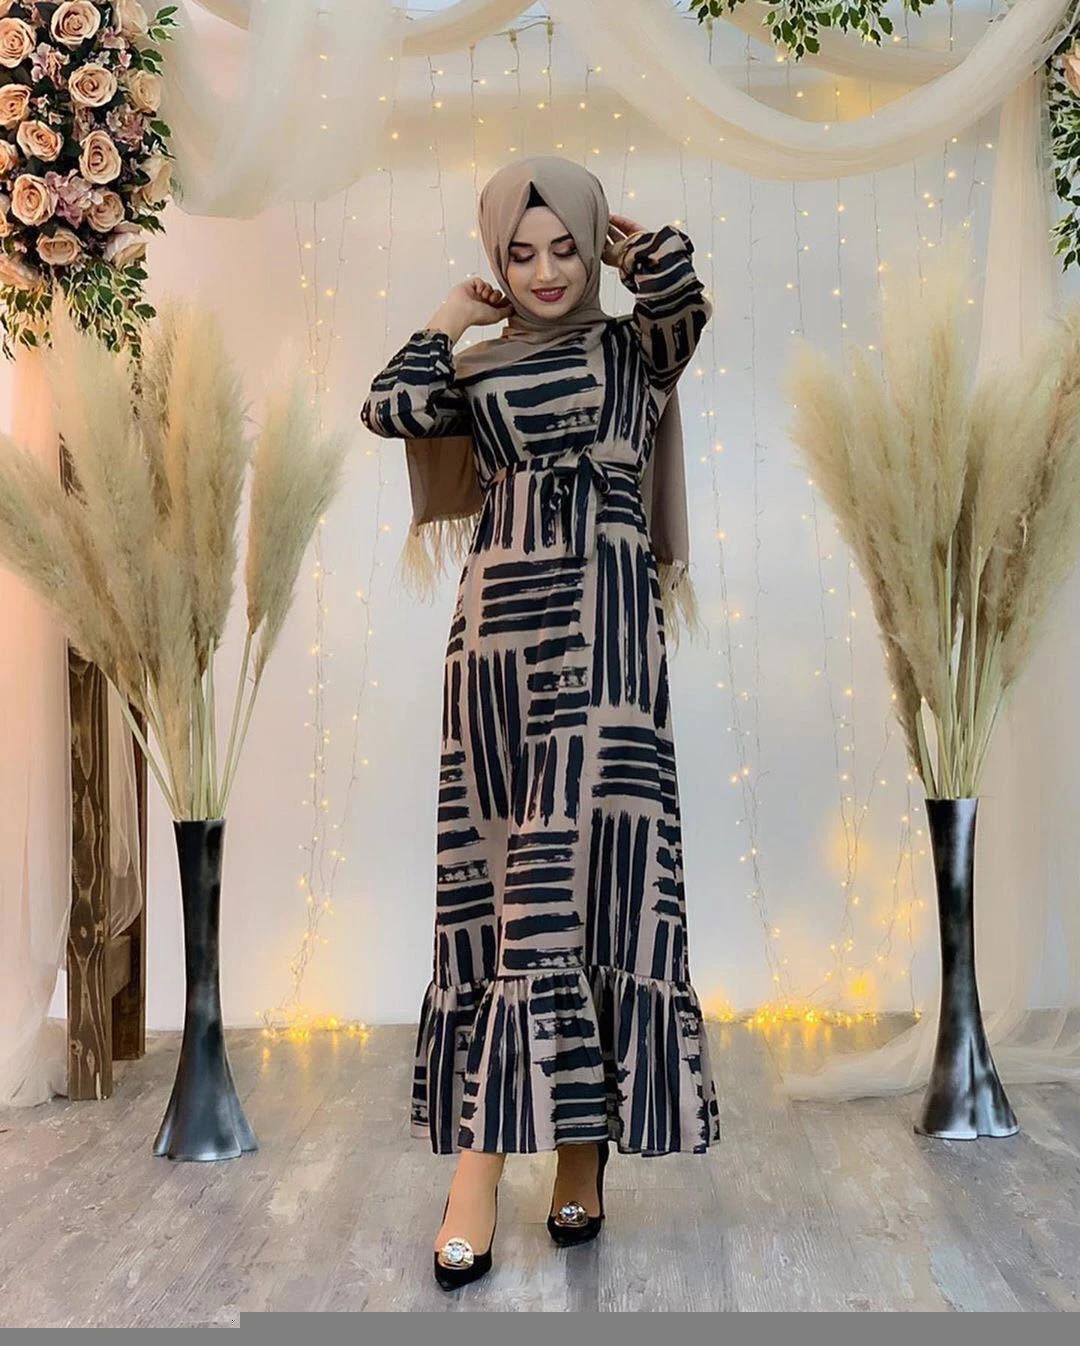 2020 Hot Sale Womens Fashion Printed Muslim Dress Long Sleeve Islamic Clothing